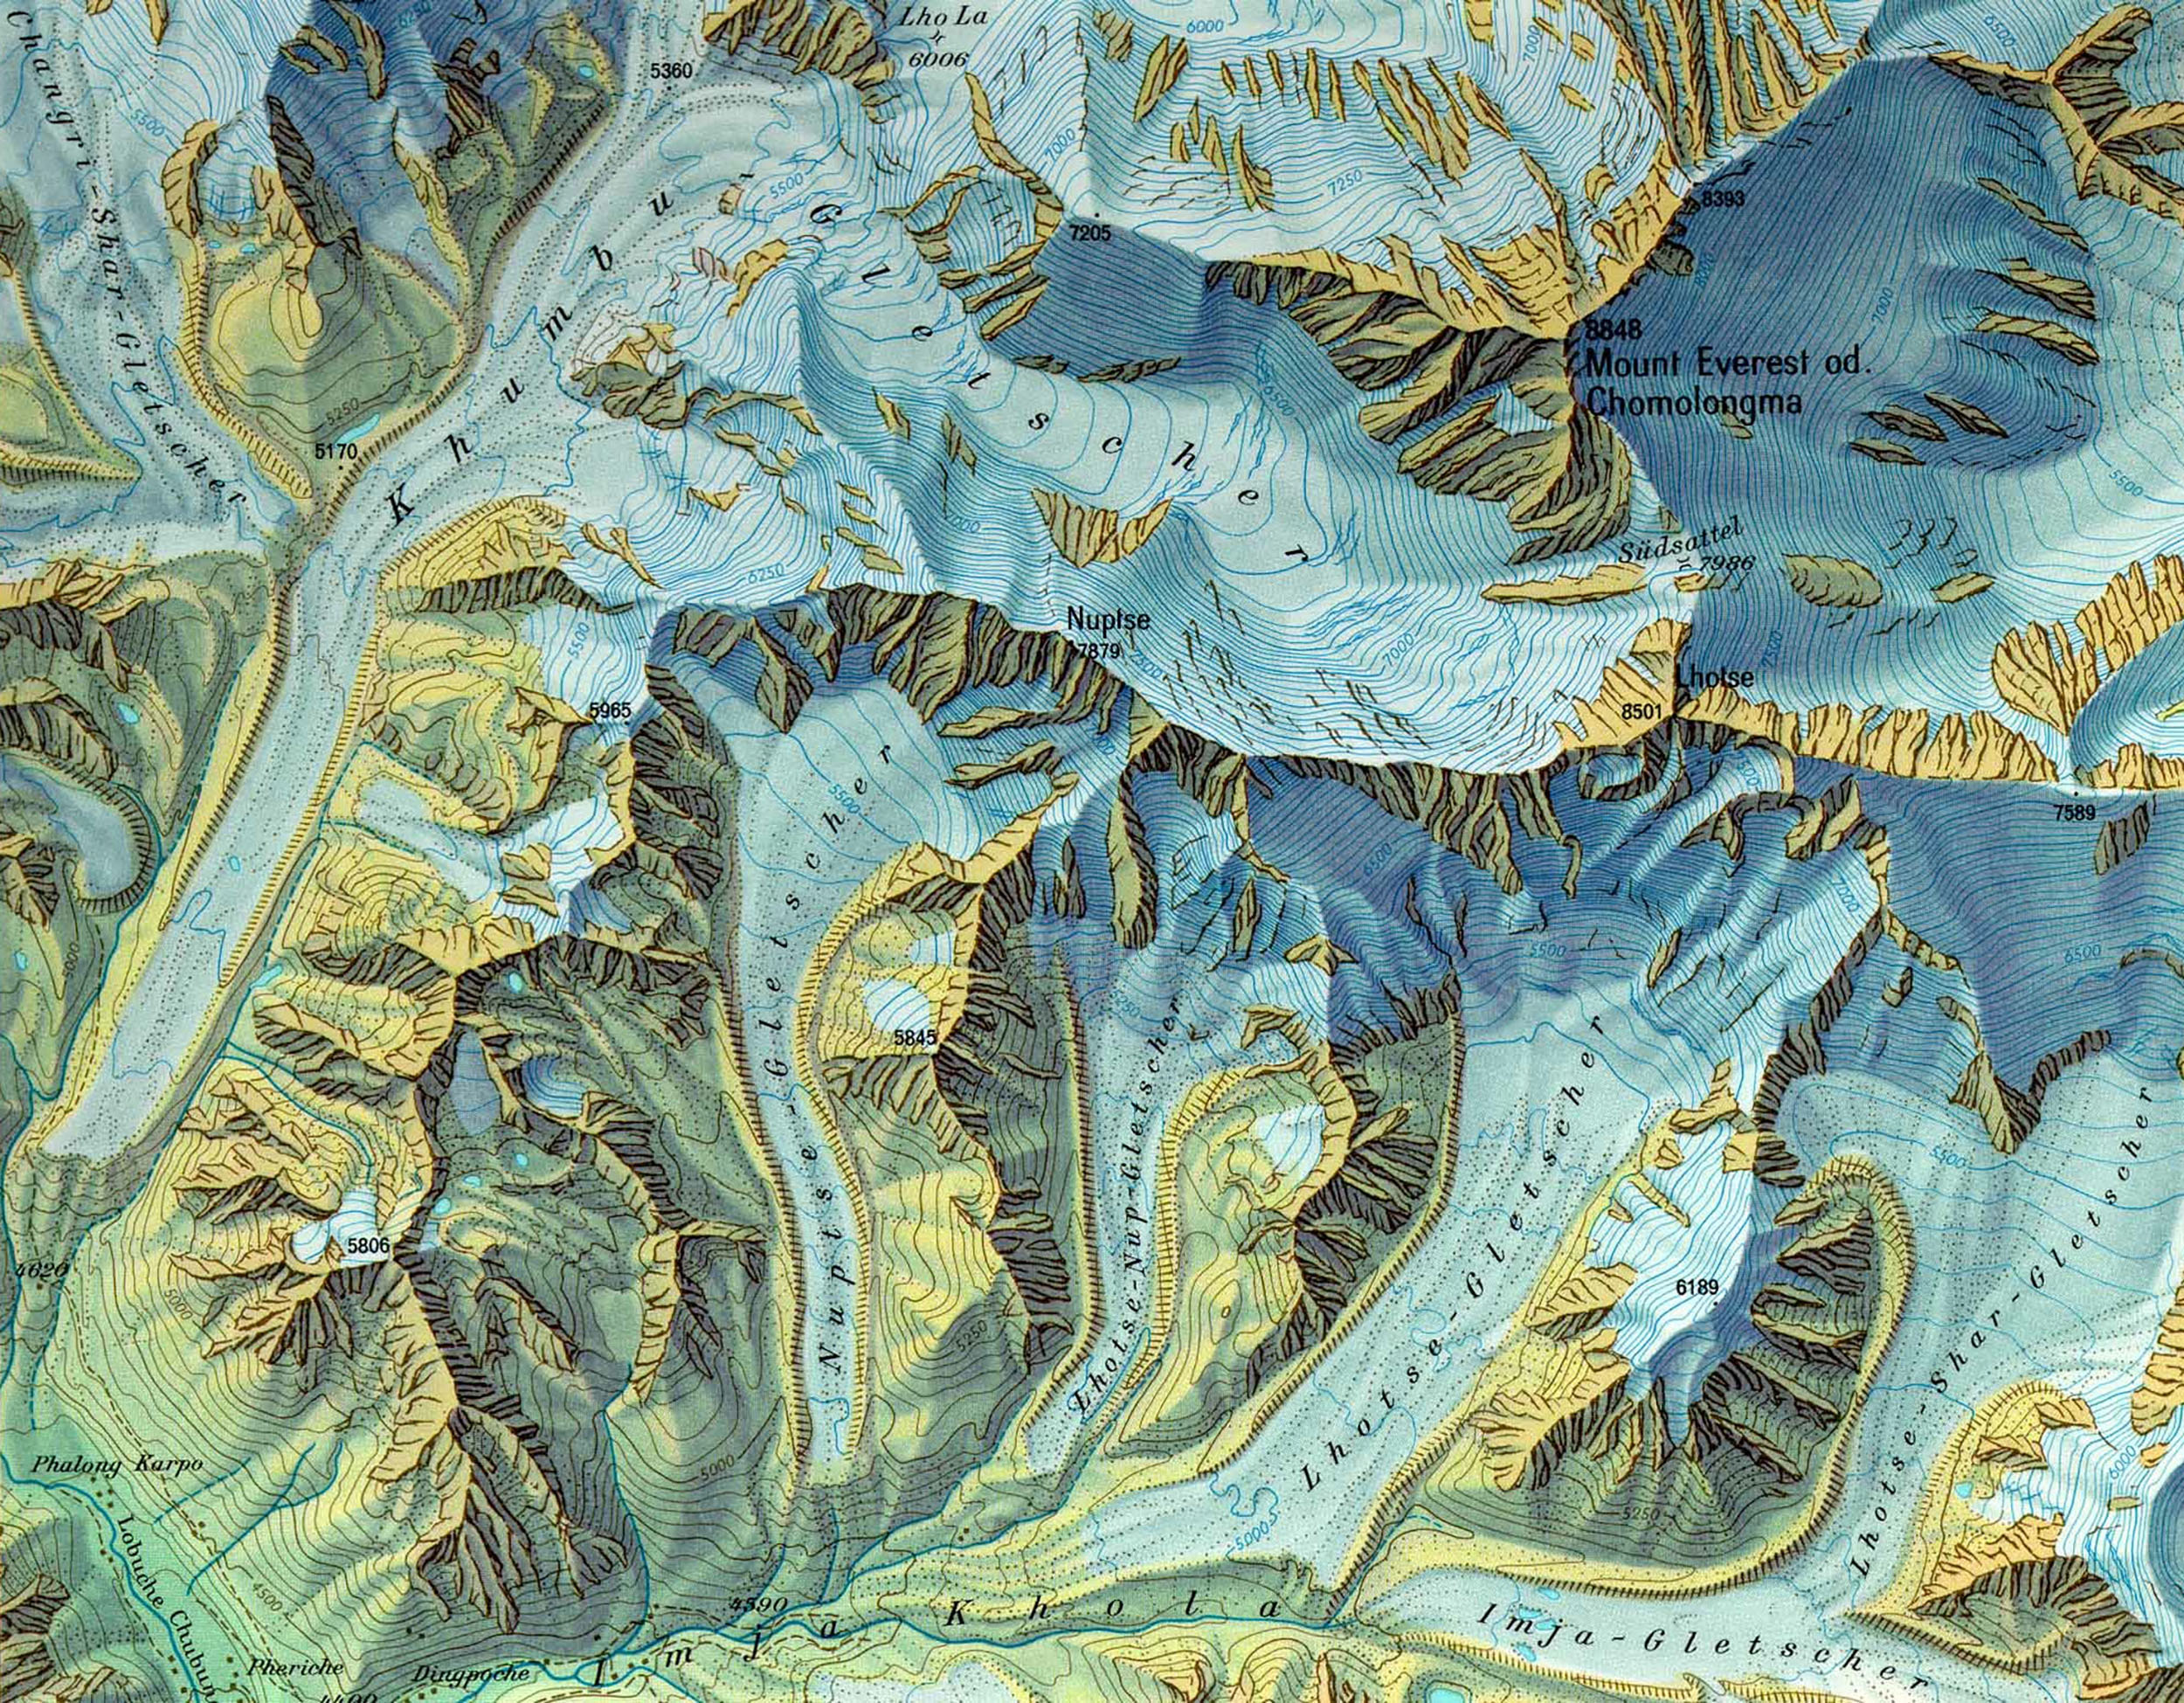 Mount Everest Cartography